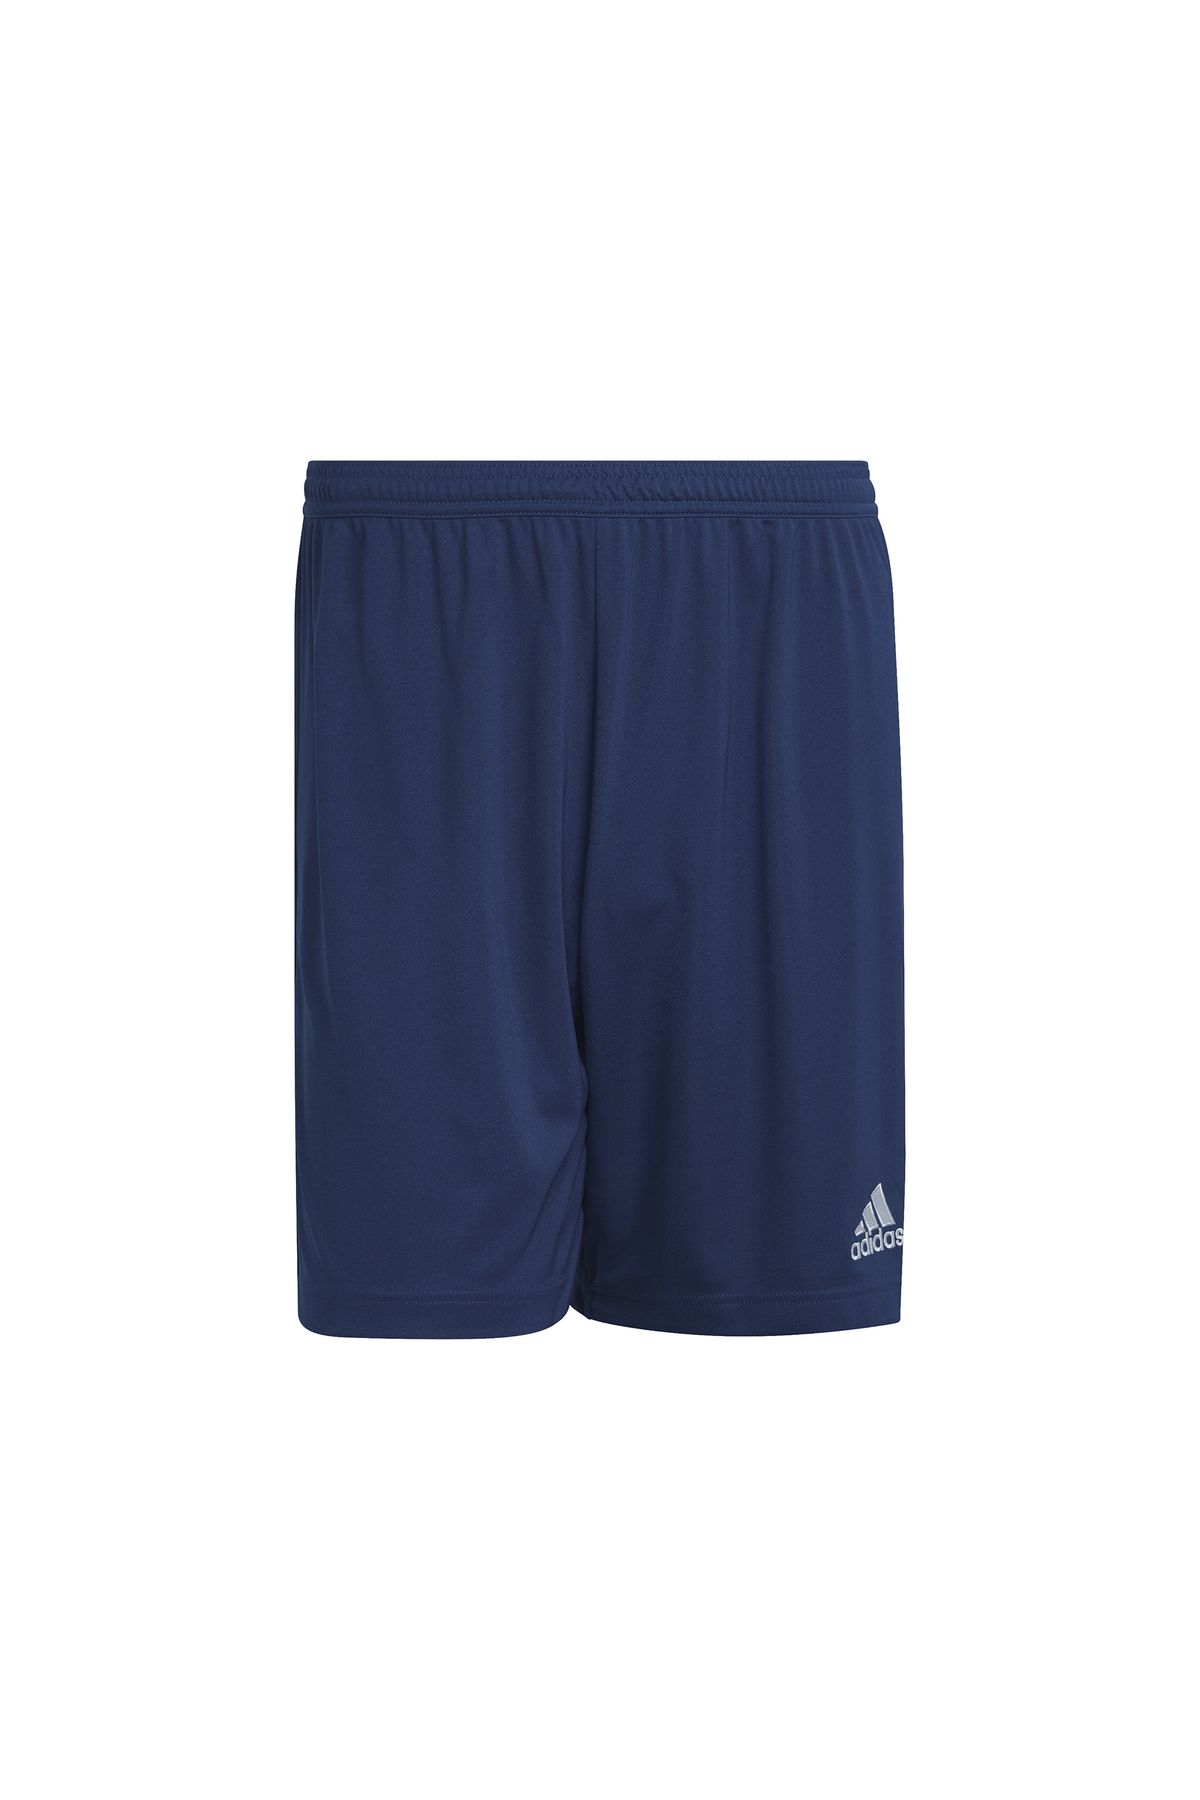 Sho Ent22 Blue Navy Trendyol - Men\'s adidas Shorts H57506